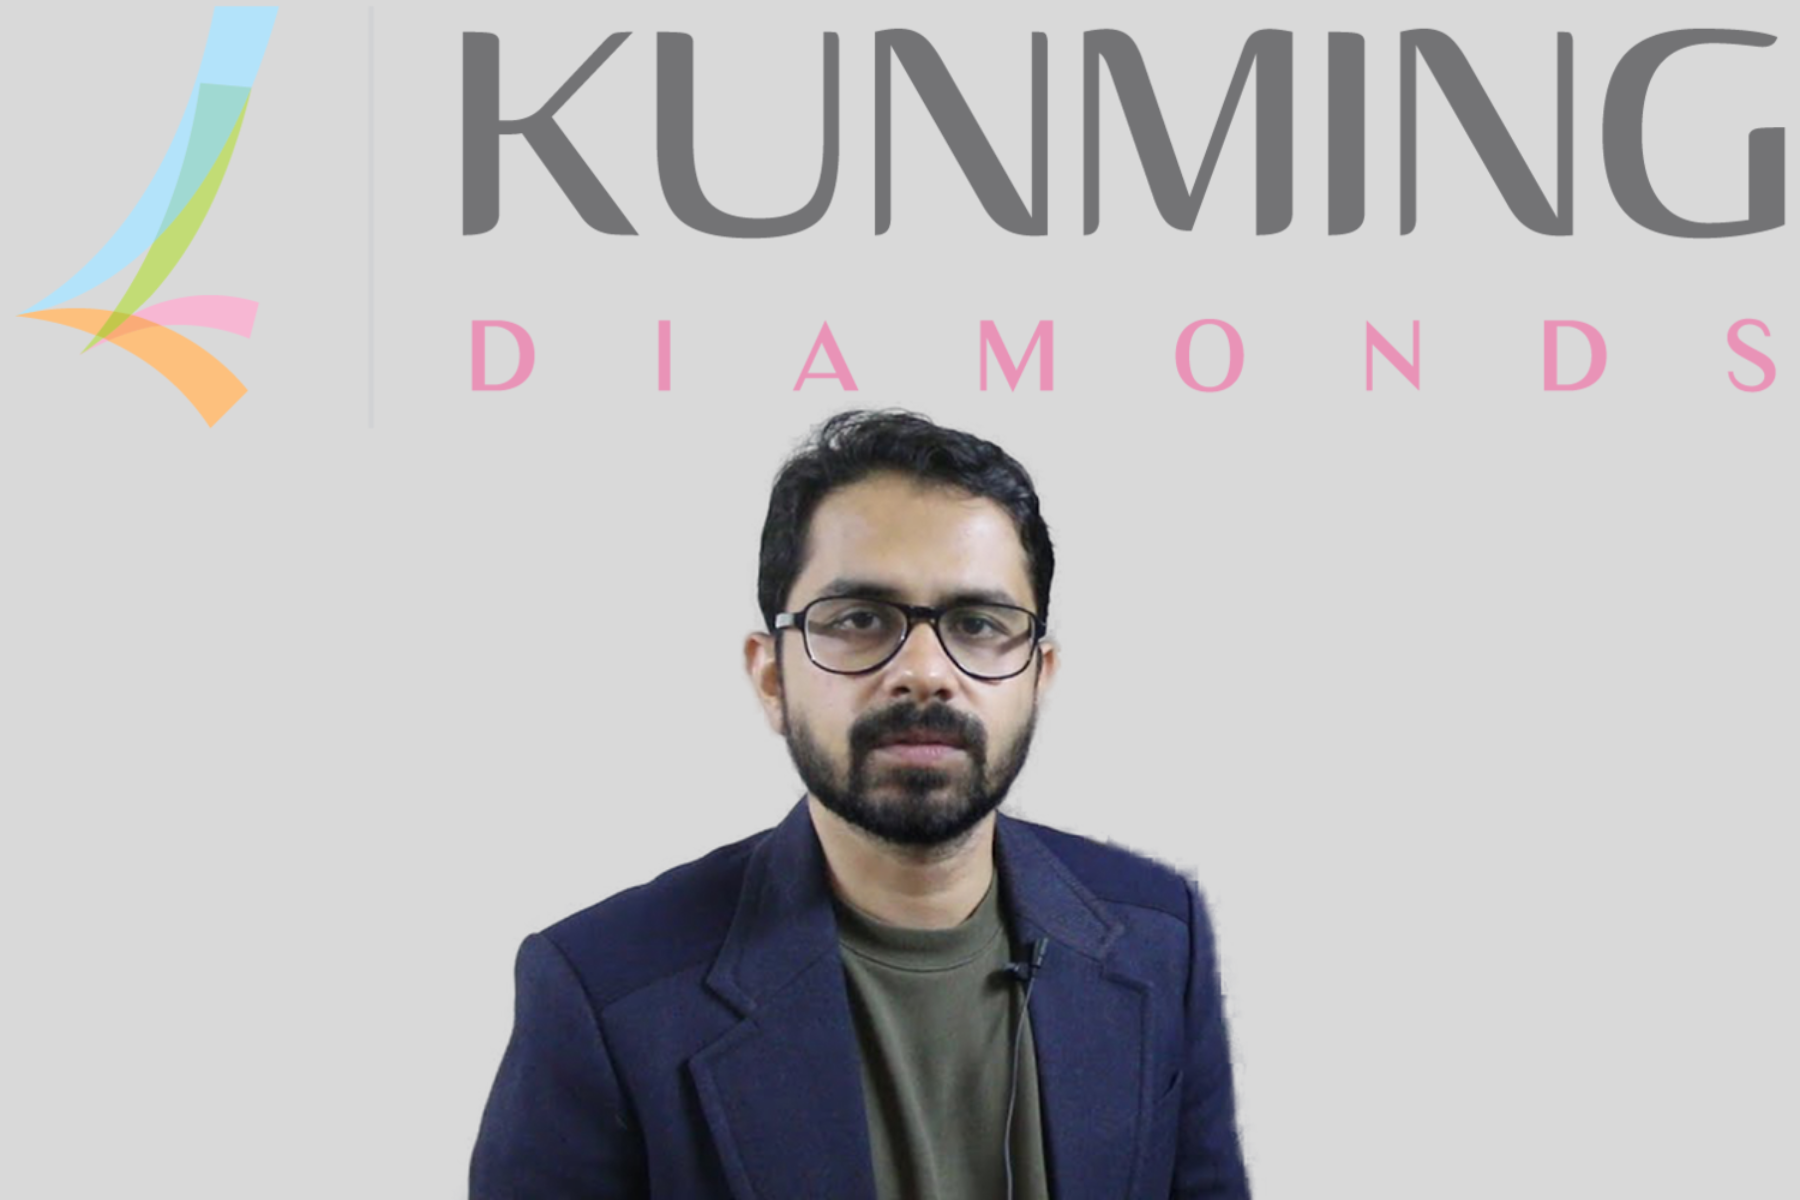 Rahul Jauhari's background features the Kunming diamond logo